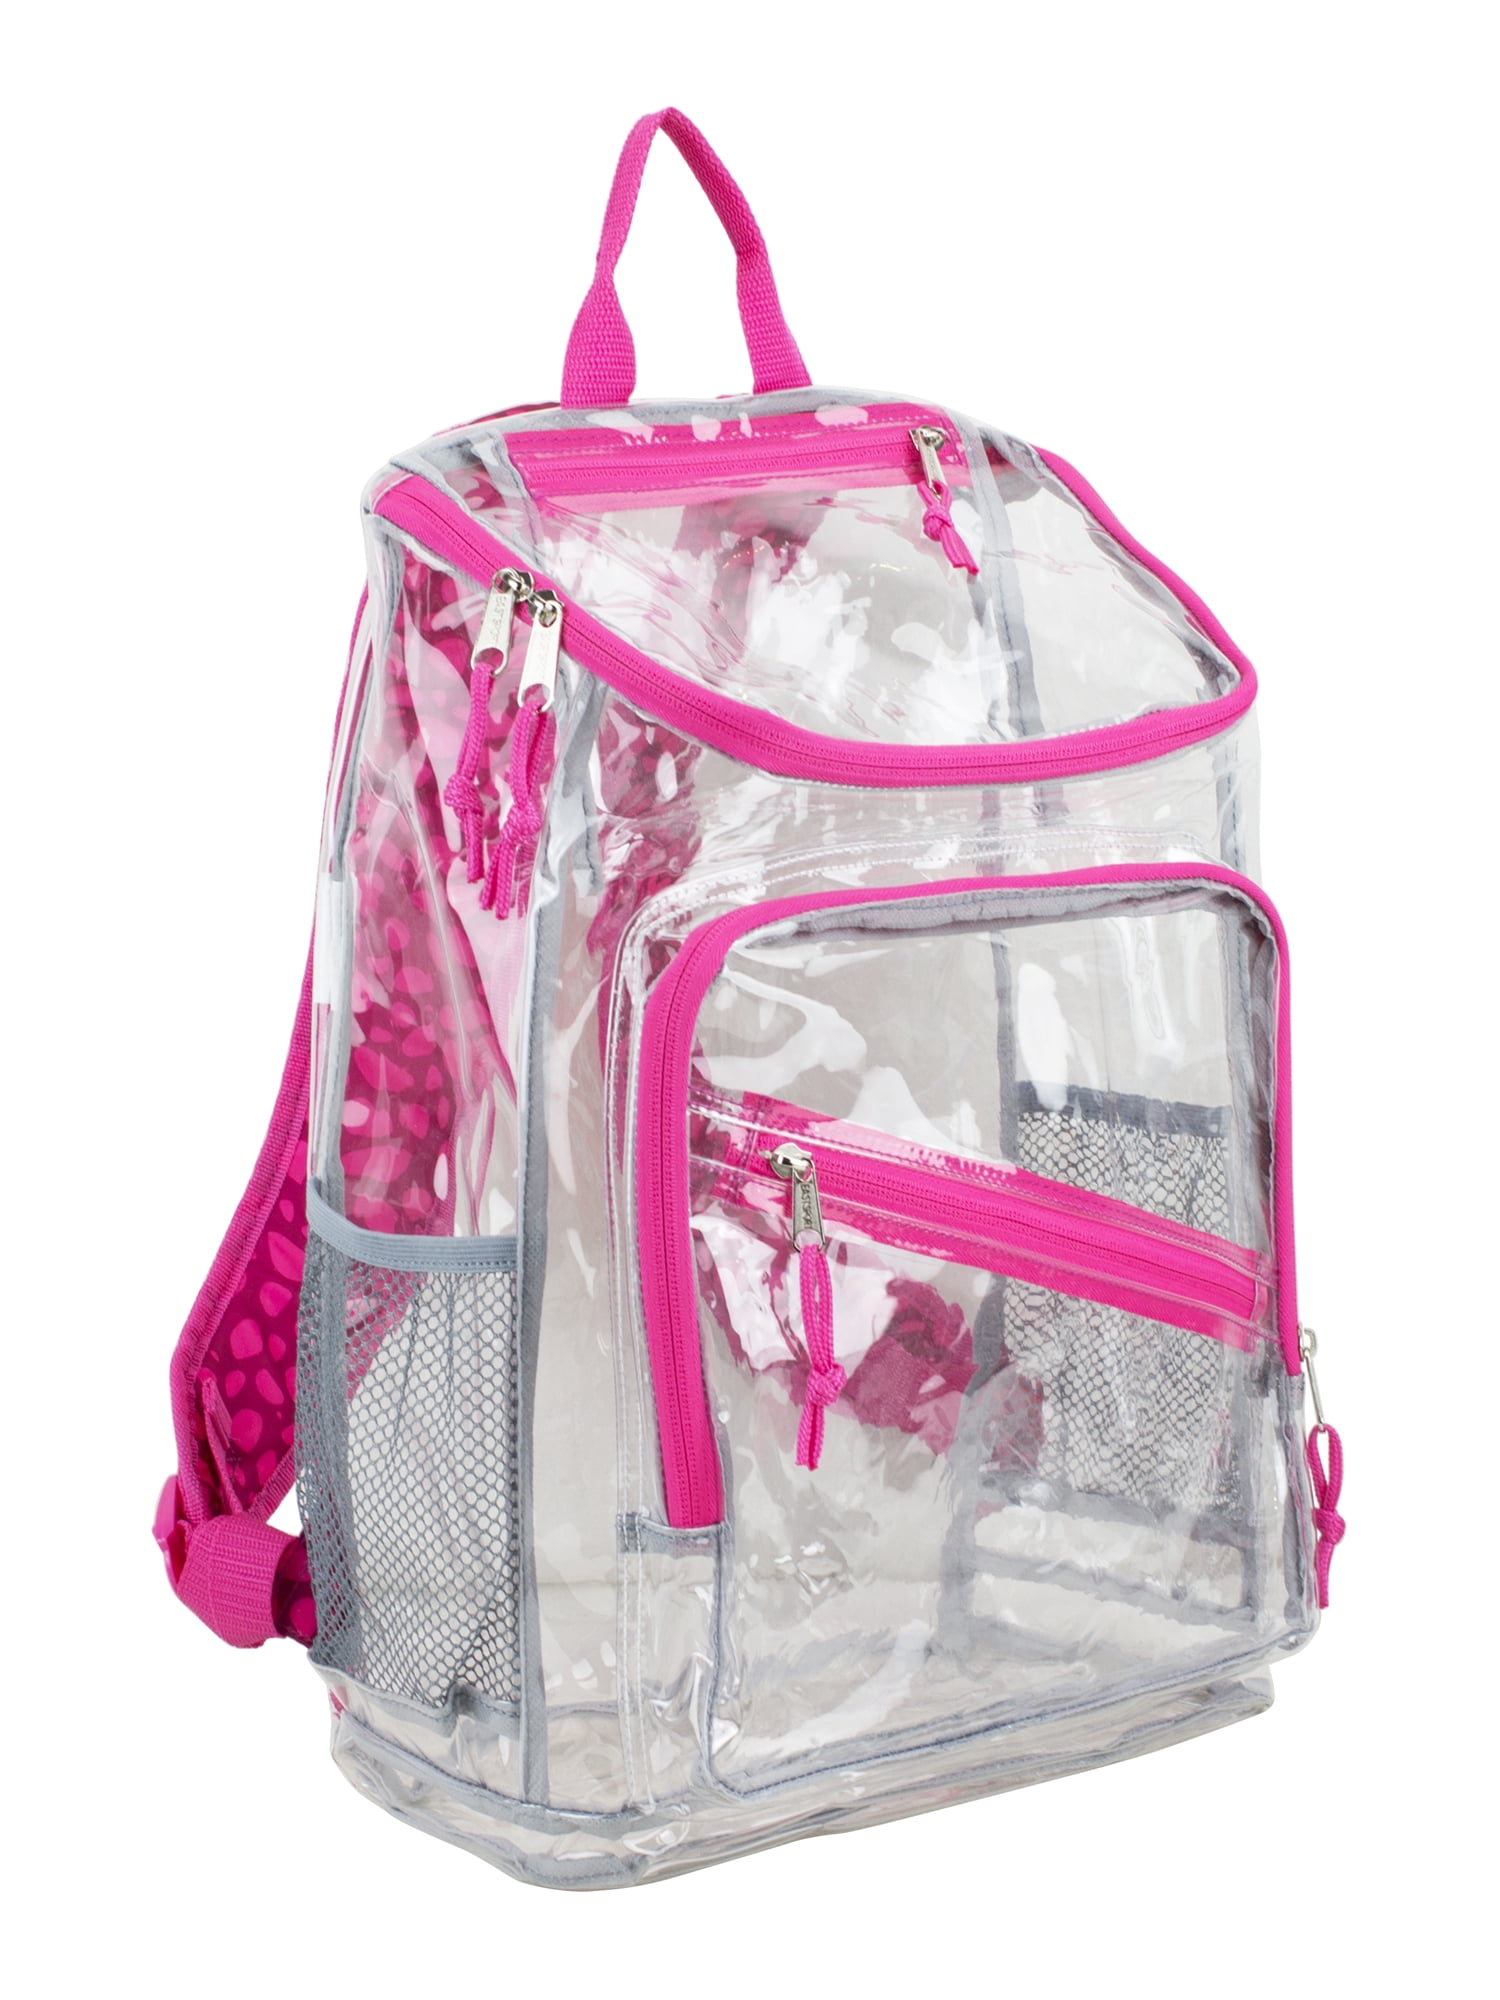 Eastsport Unisex Clear Top Loading Backpack, Pink Marble Dots - Walmart.com